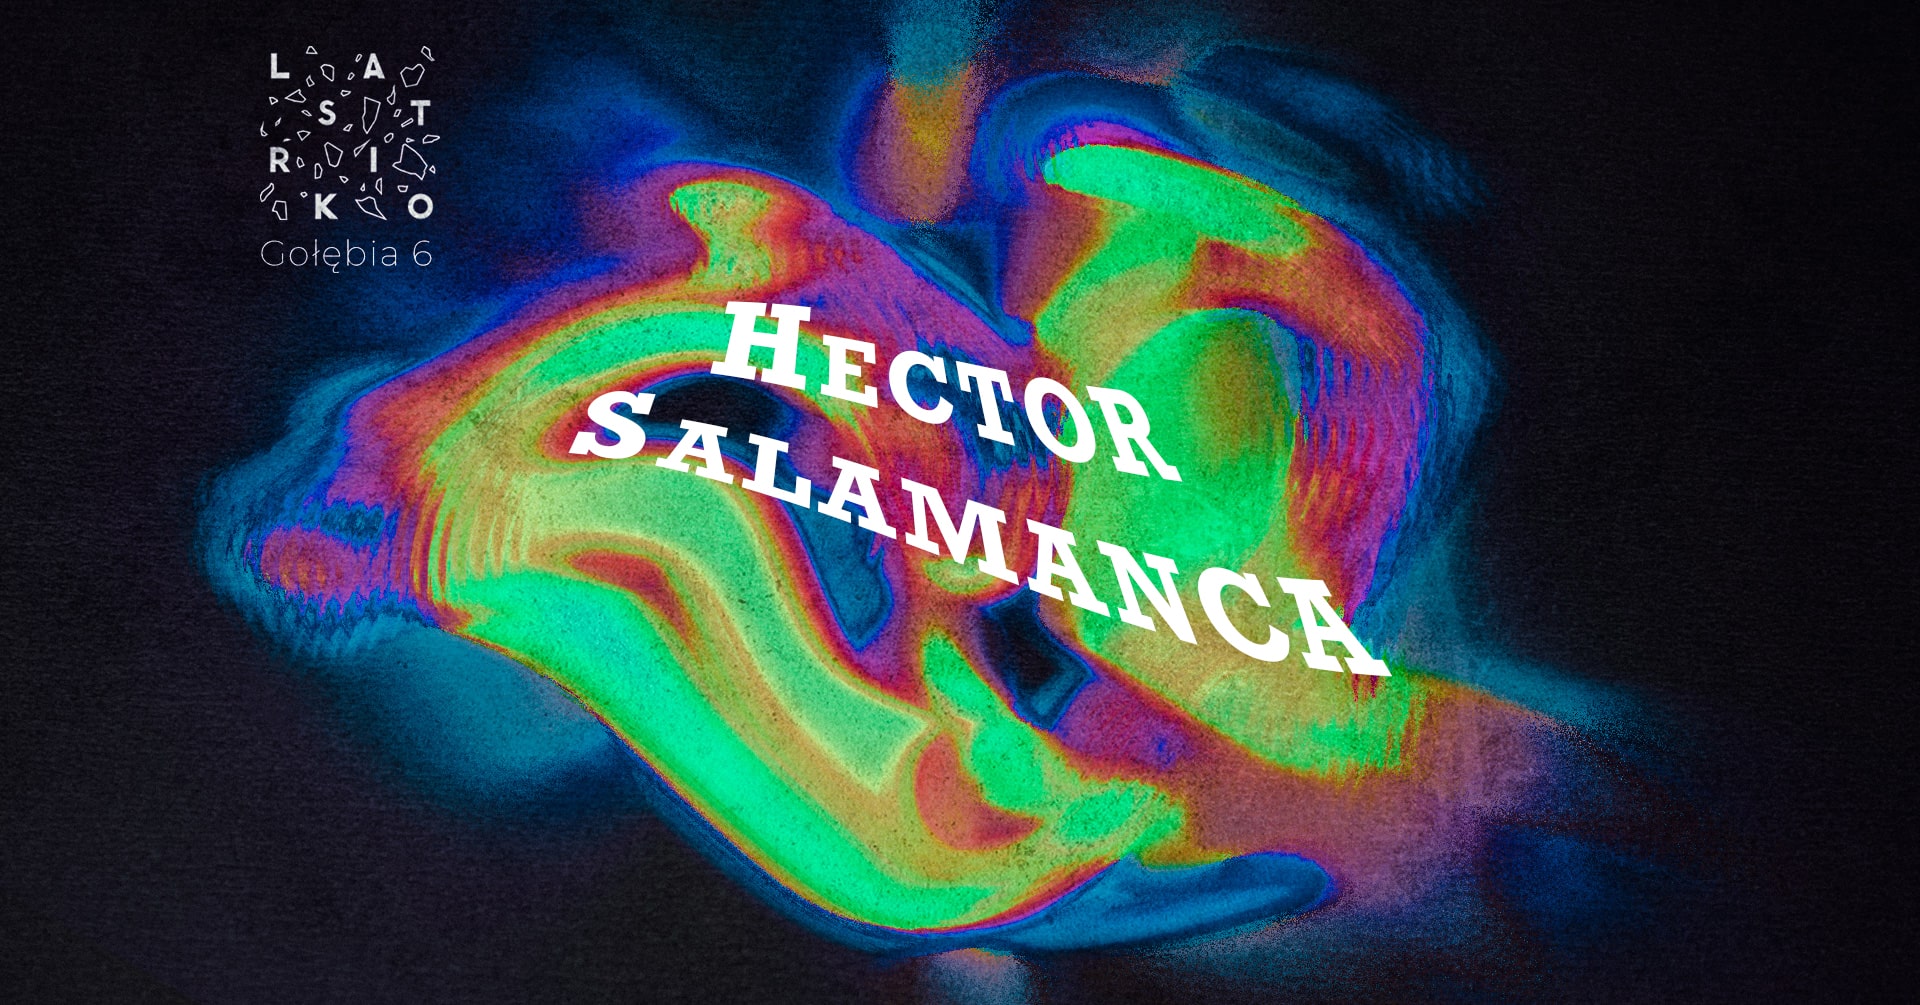 Hector Salamanca